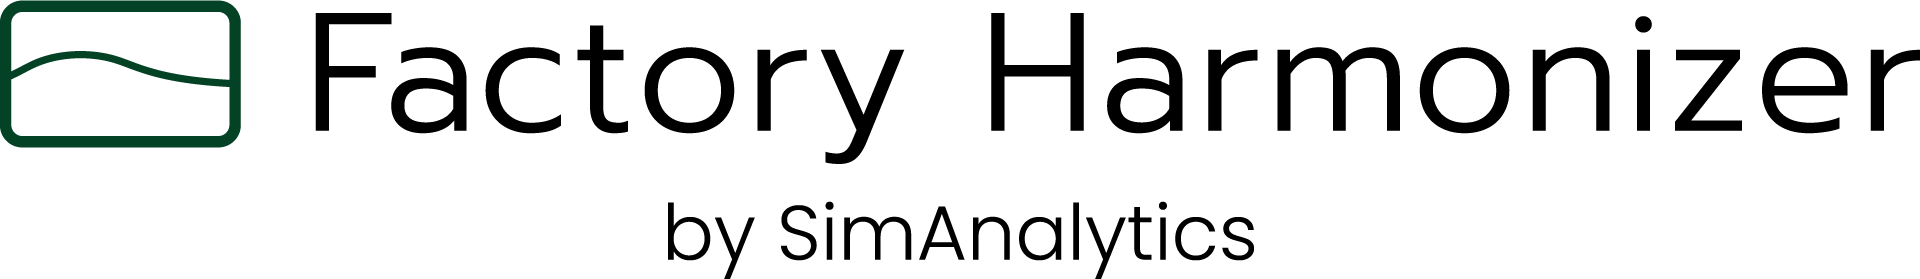 Factory-Harmonizer-logo.png